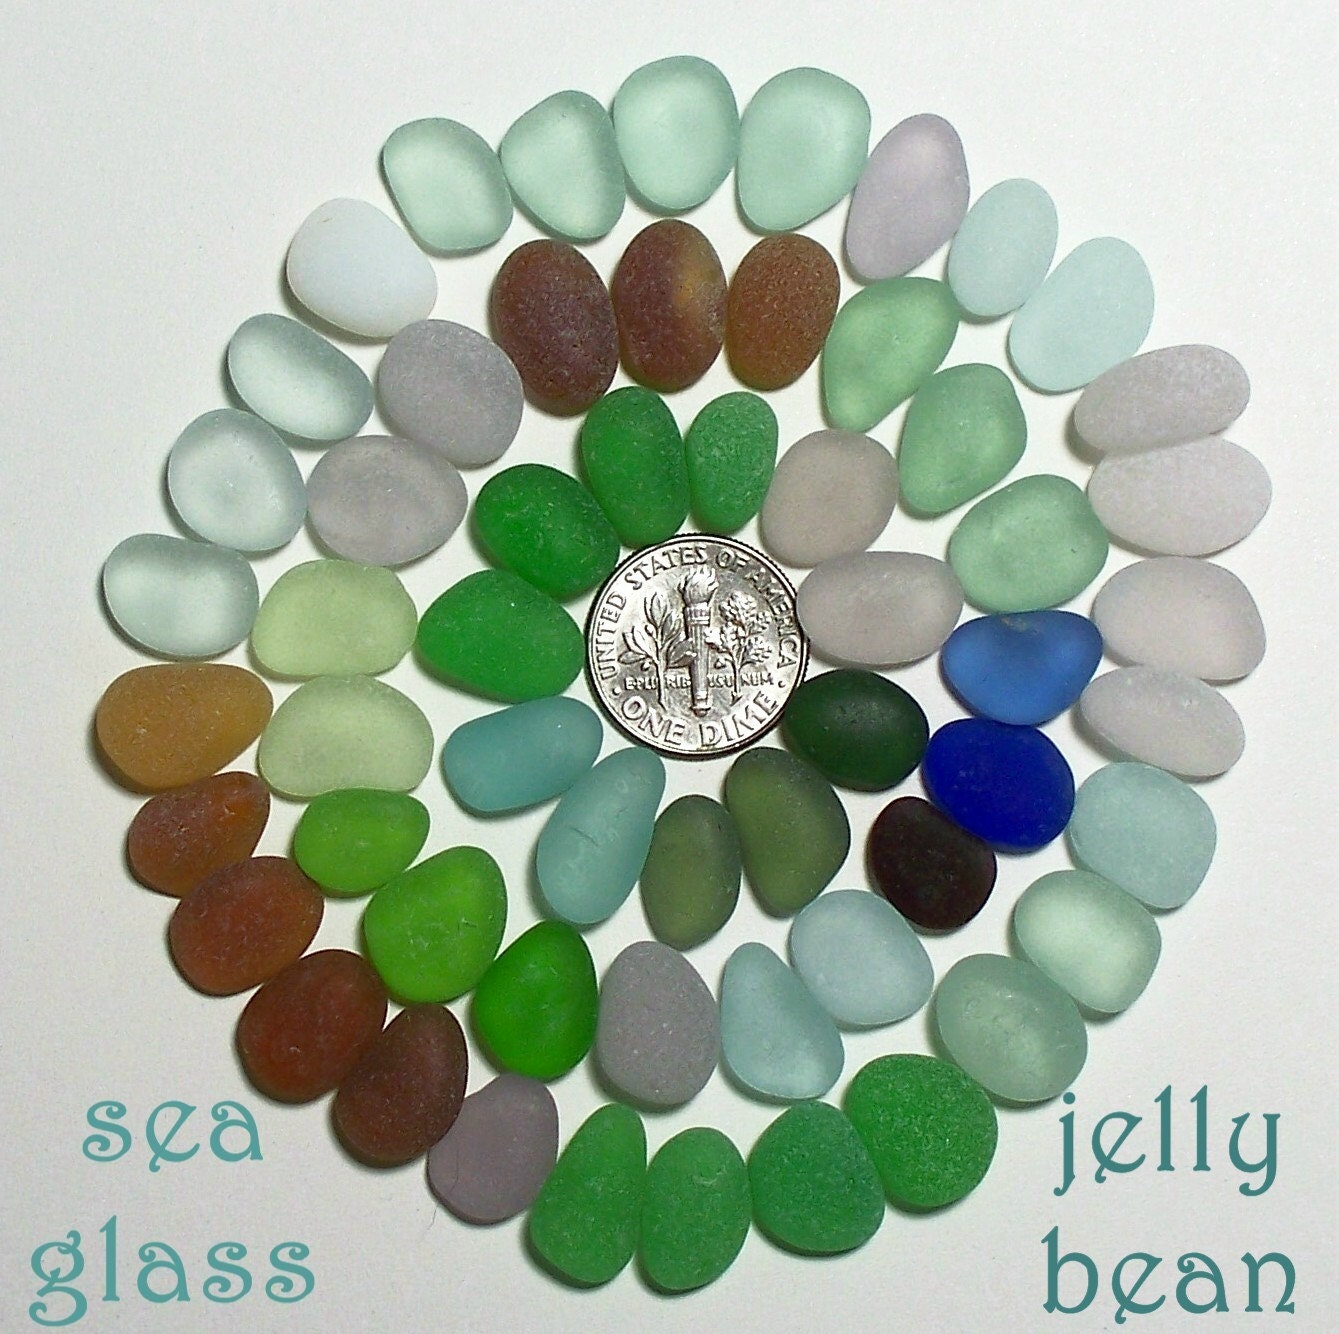 jelly bean glass